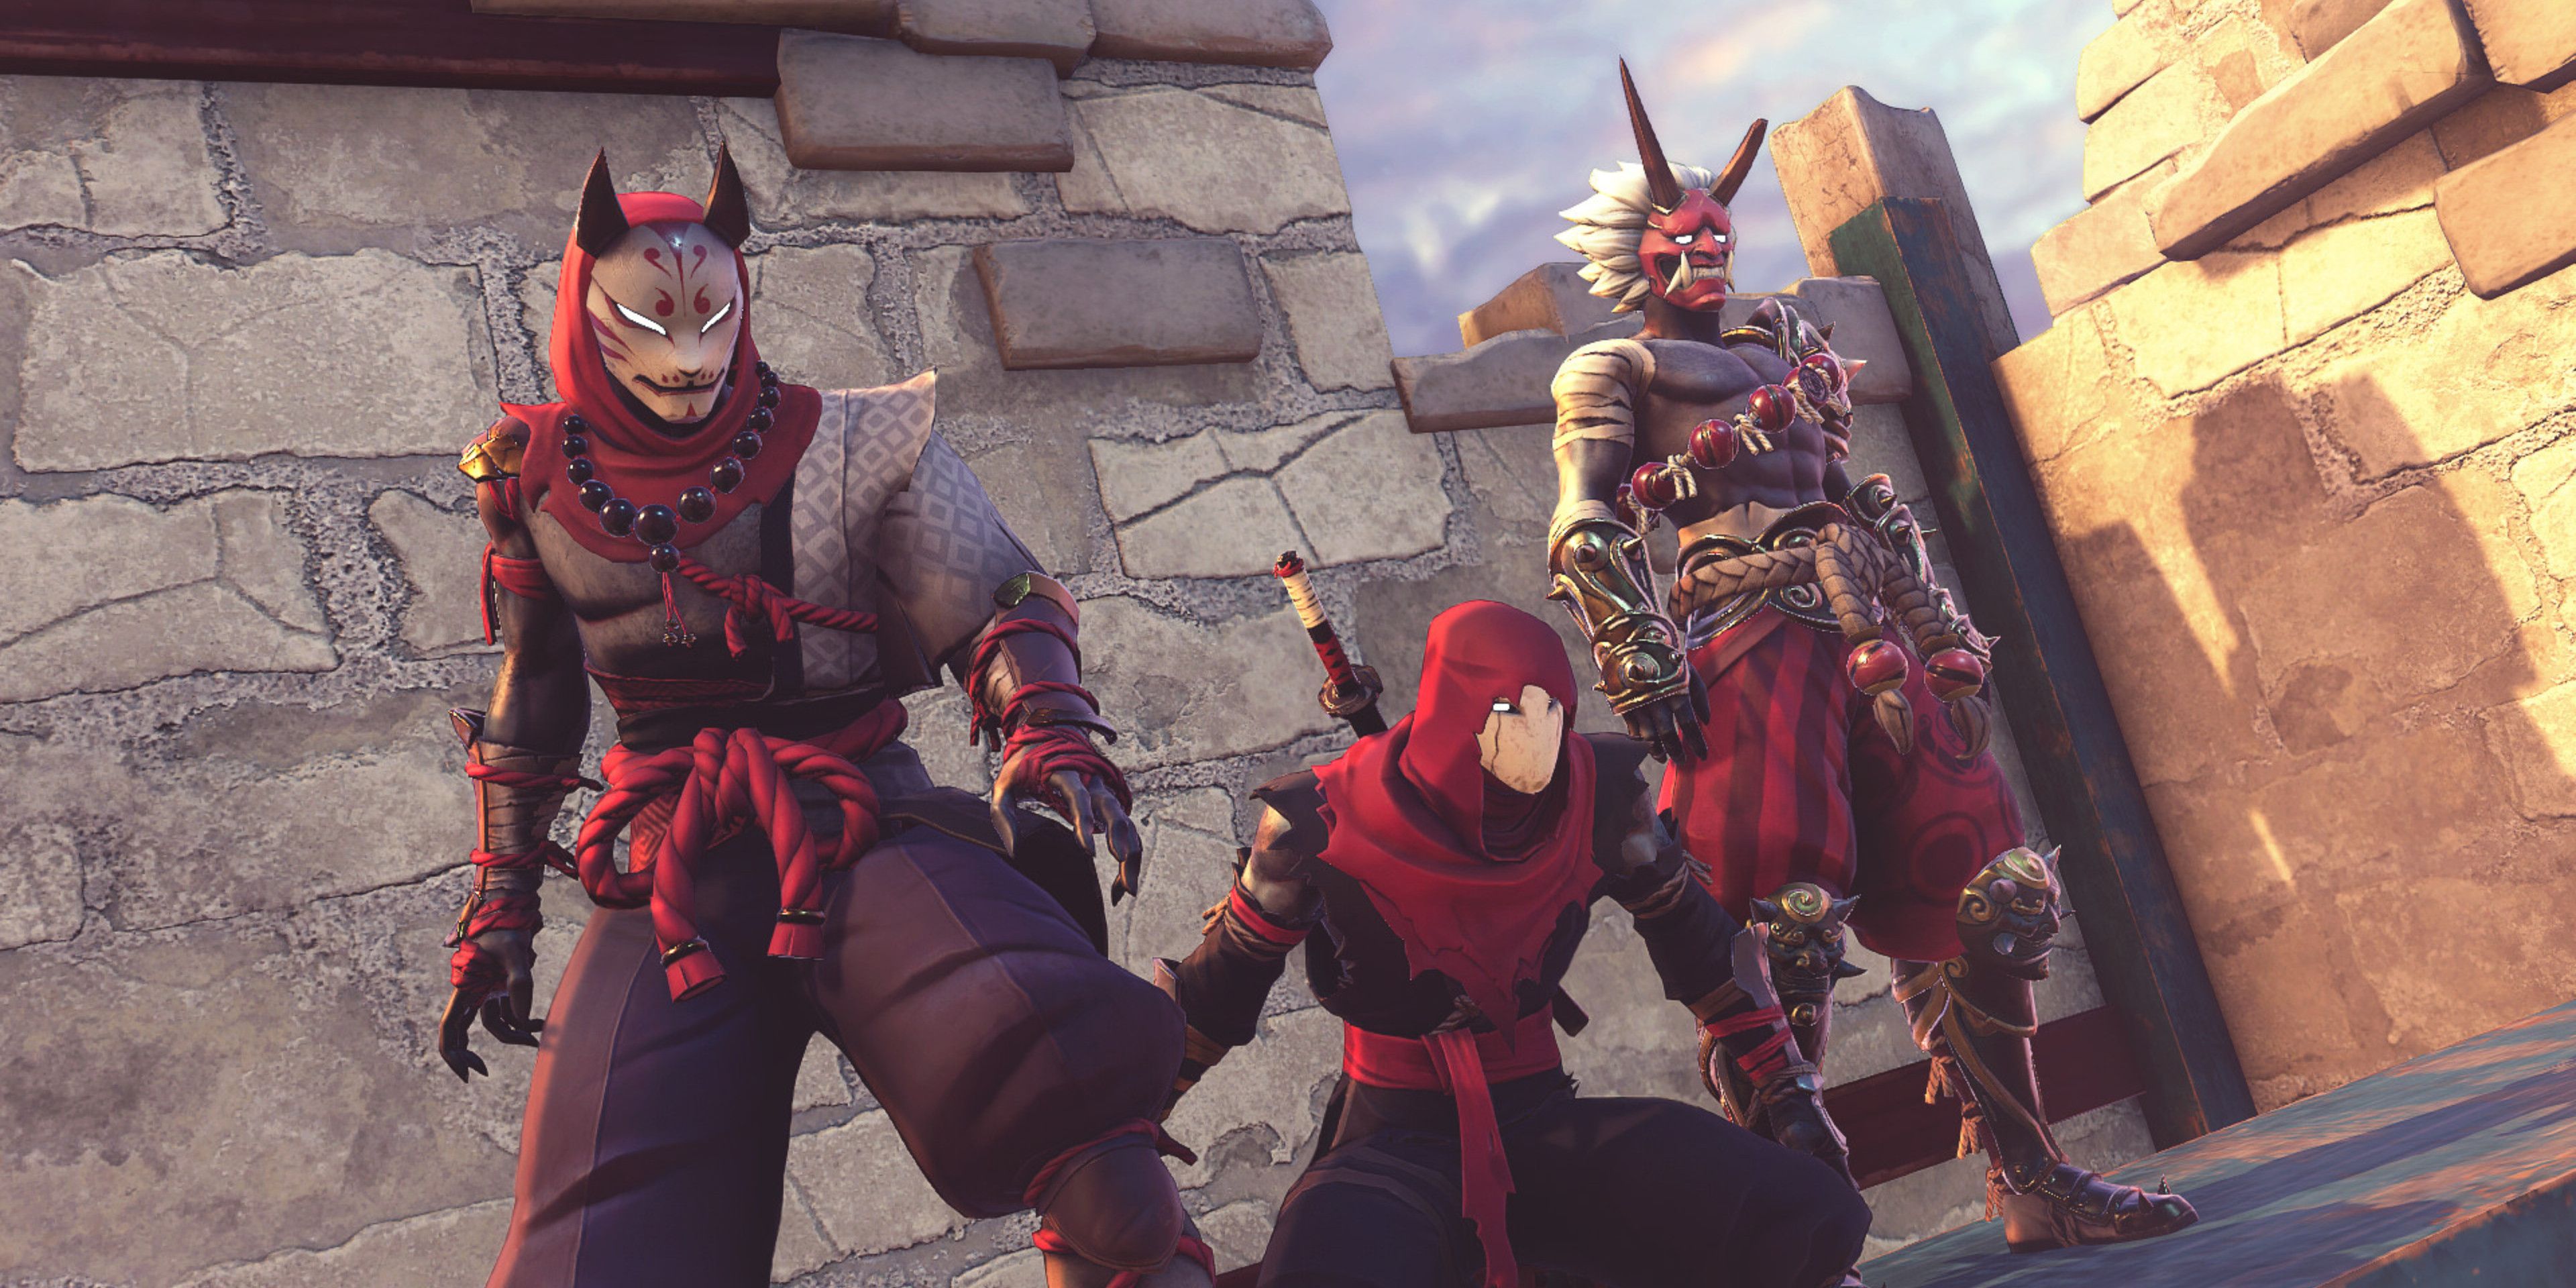 A team of three ninjas in co-op mode